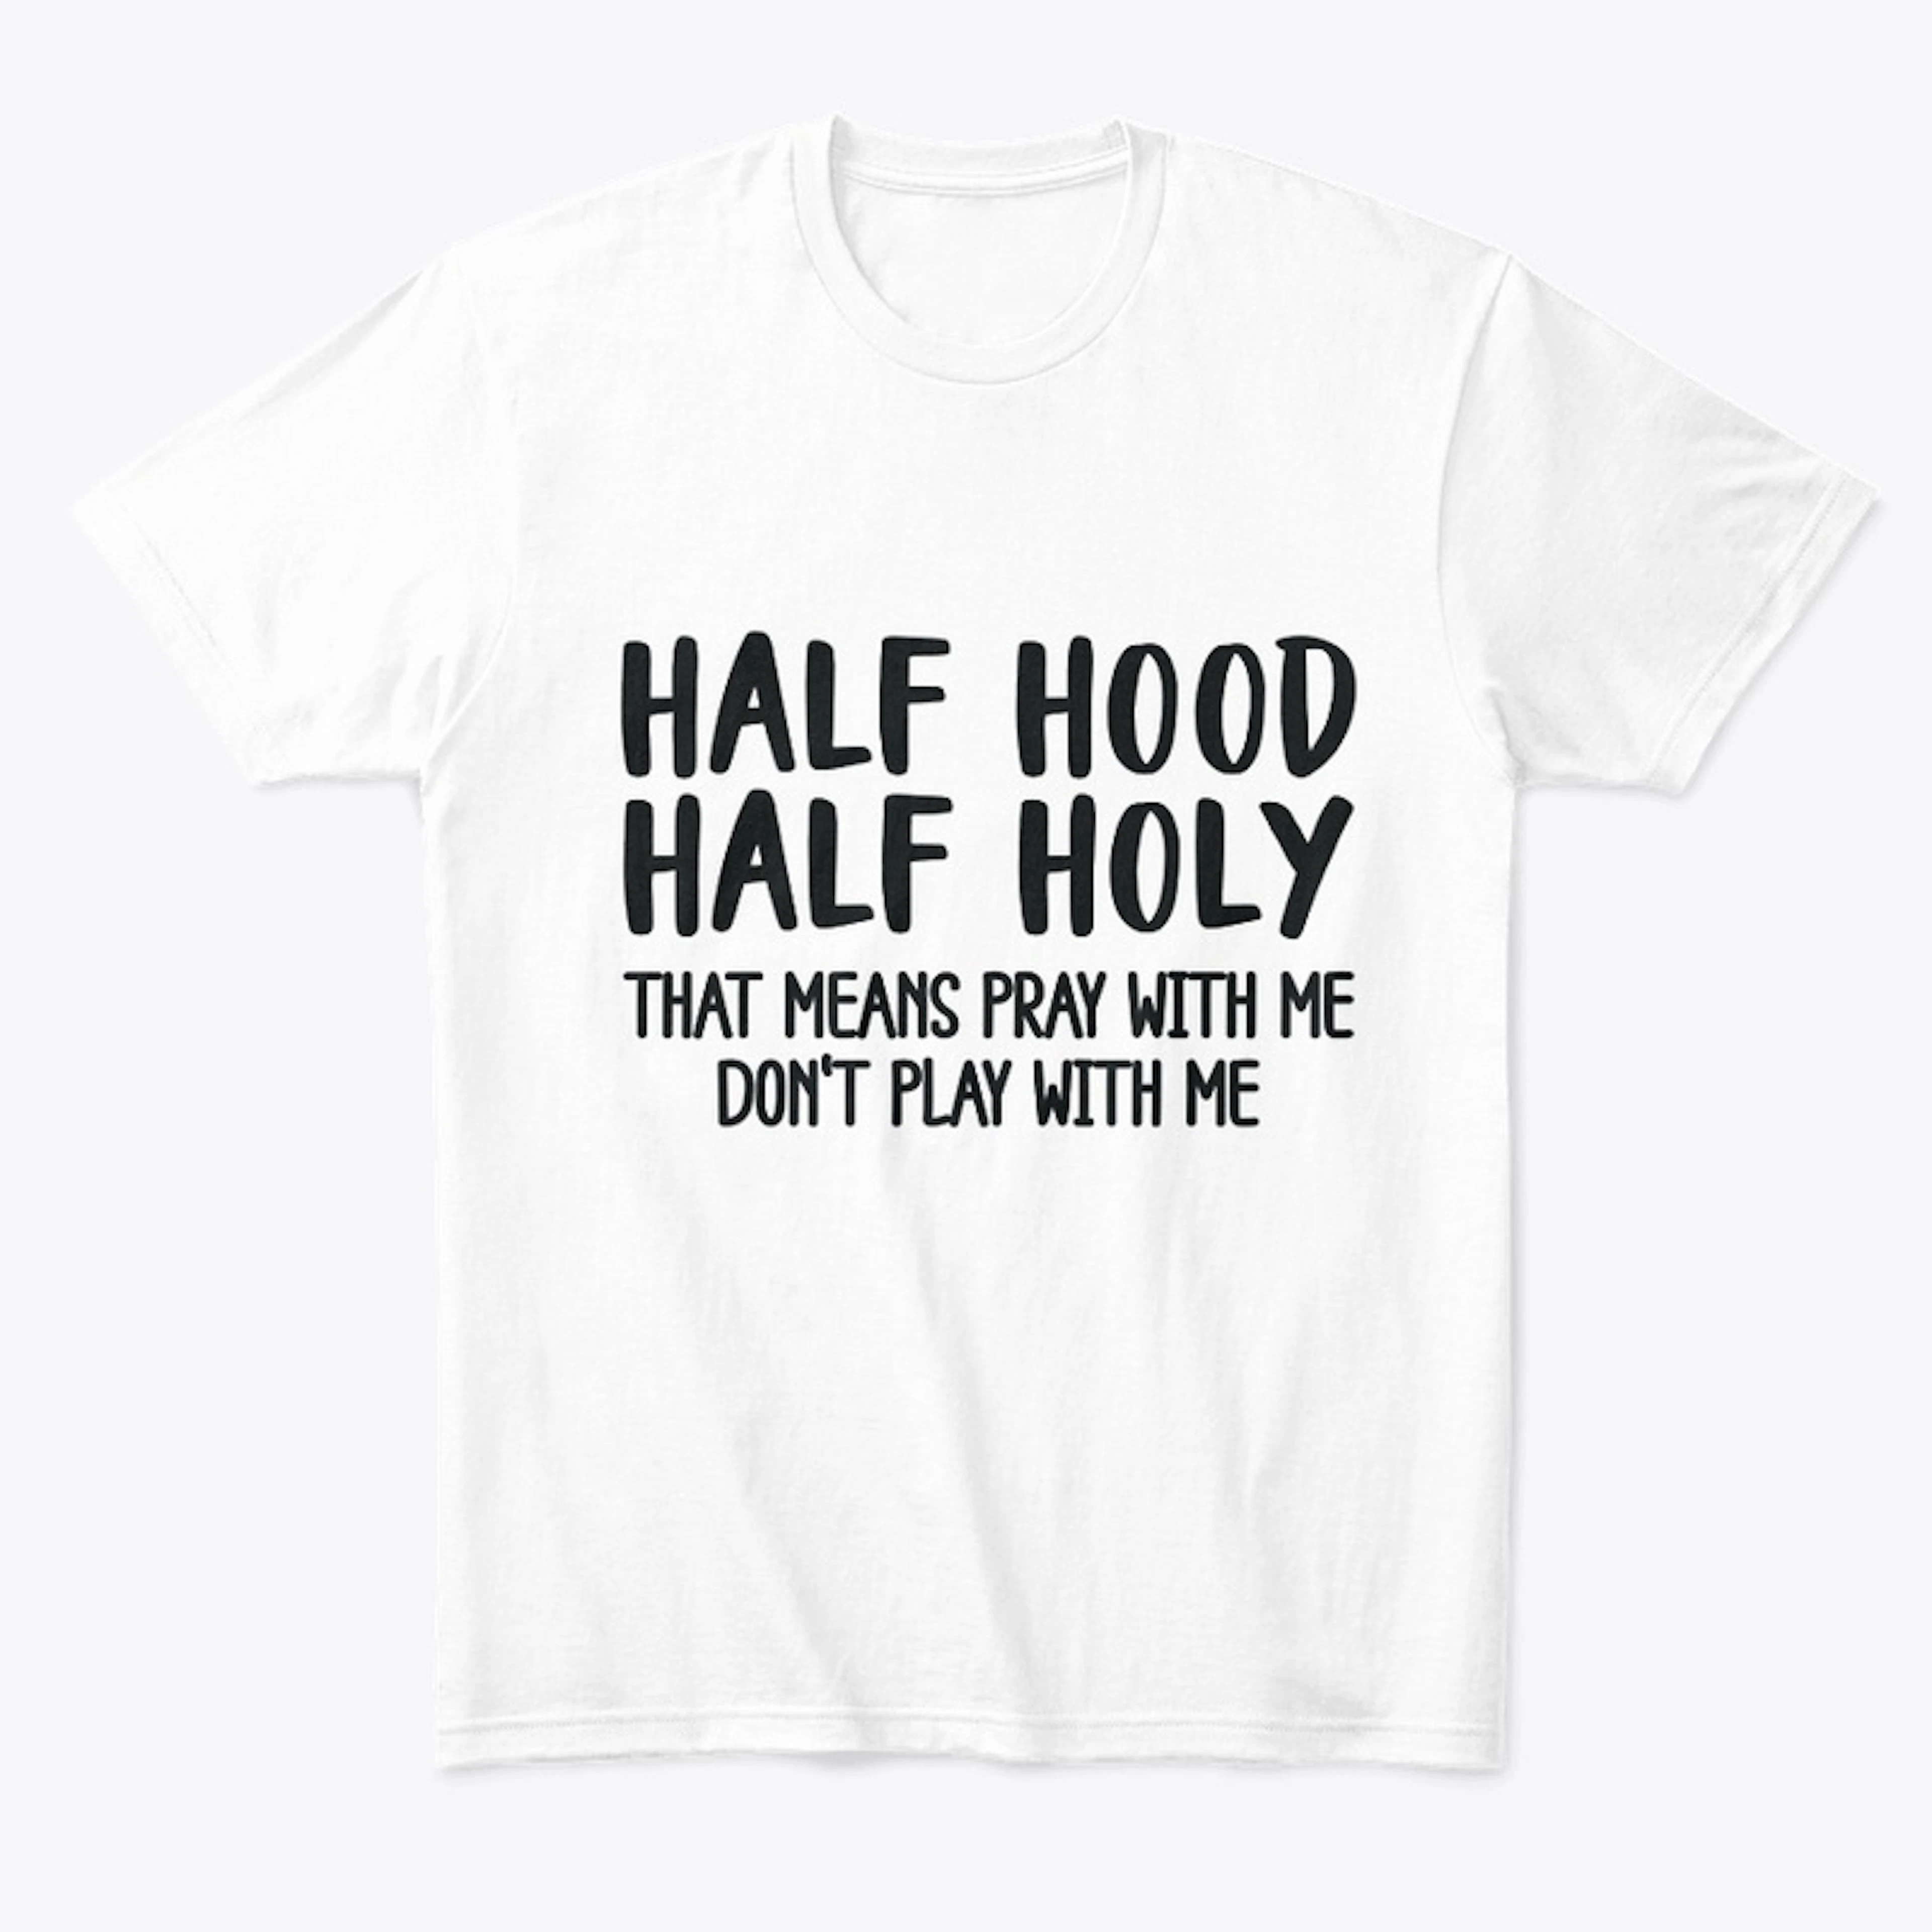 Half Holy, Half Hood